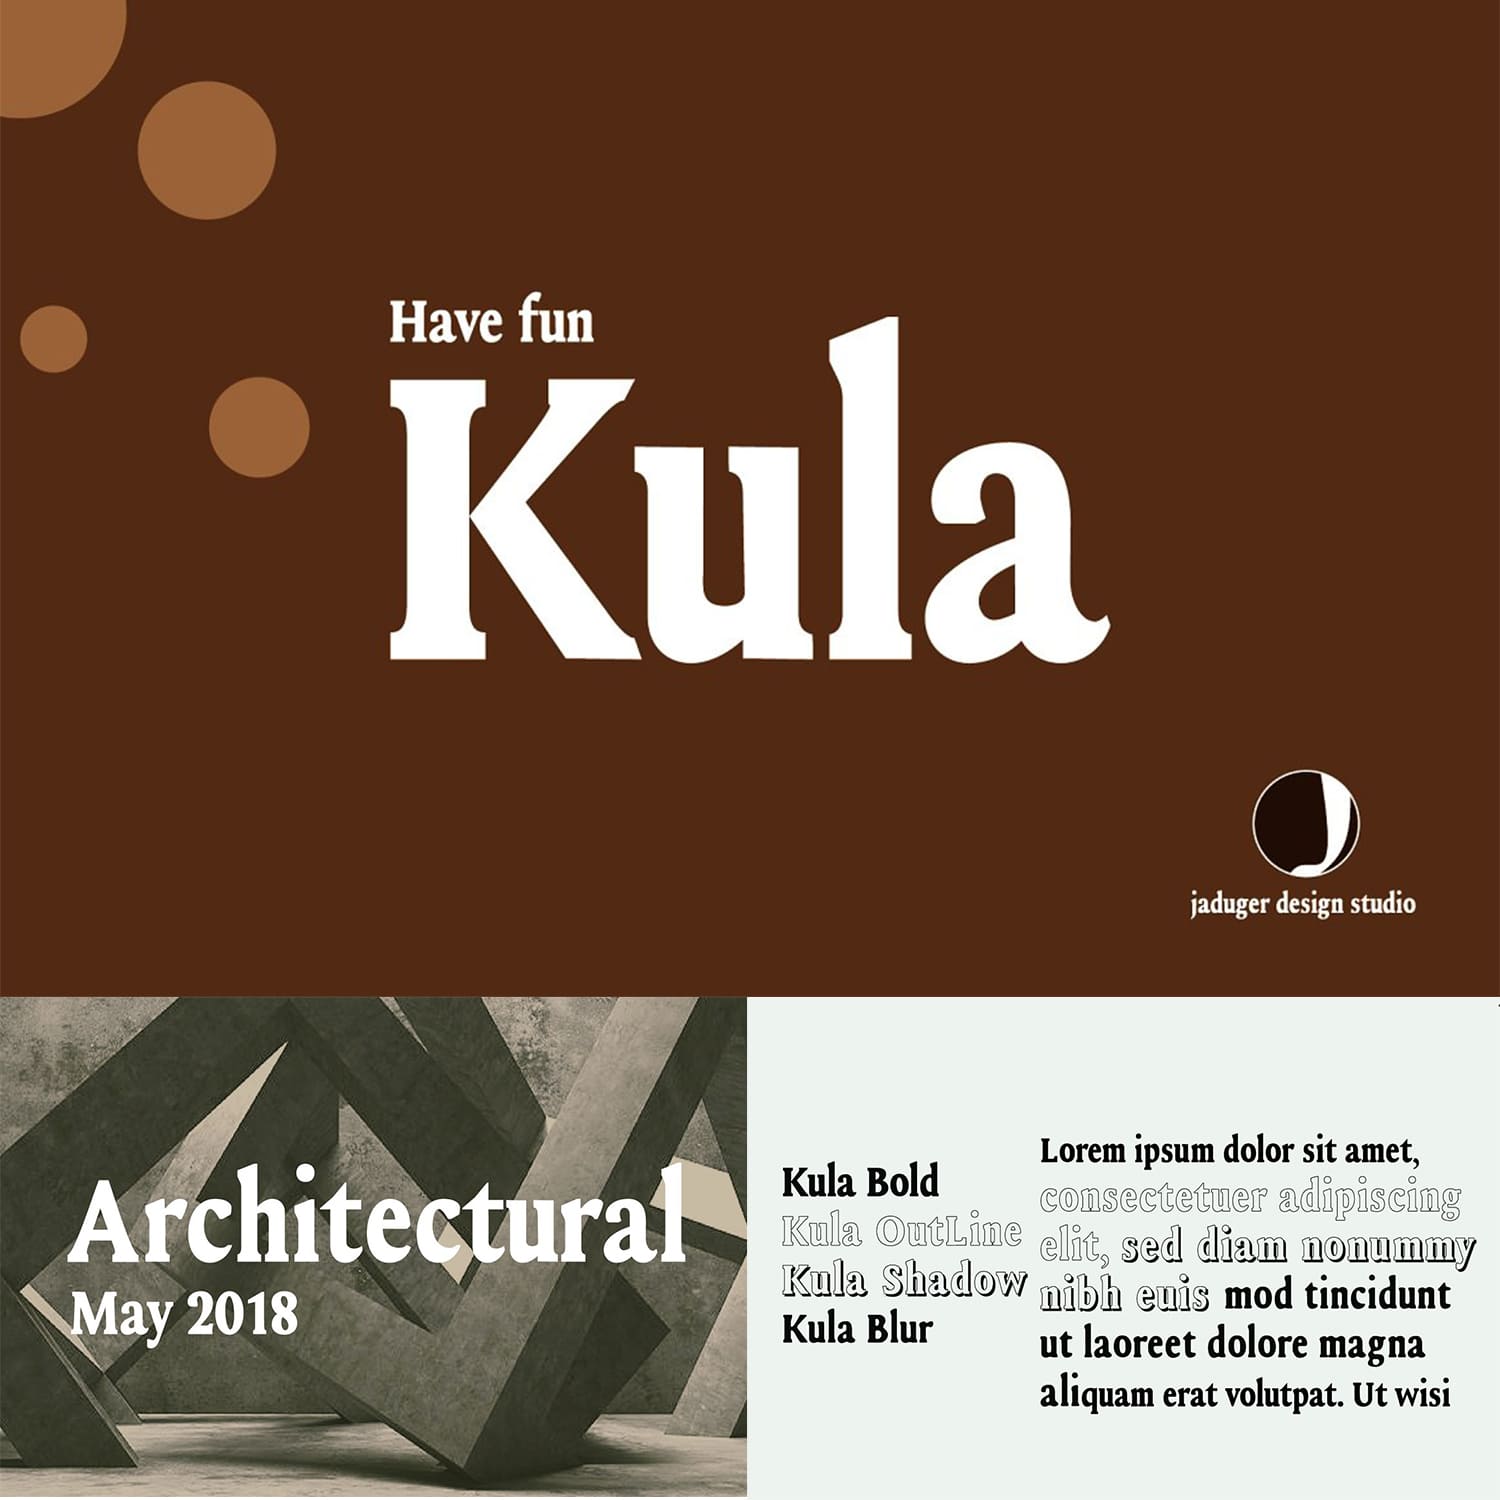 Kula-50% off cover image.